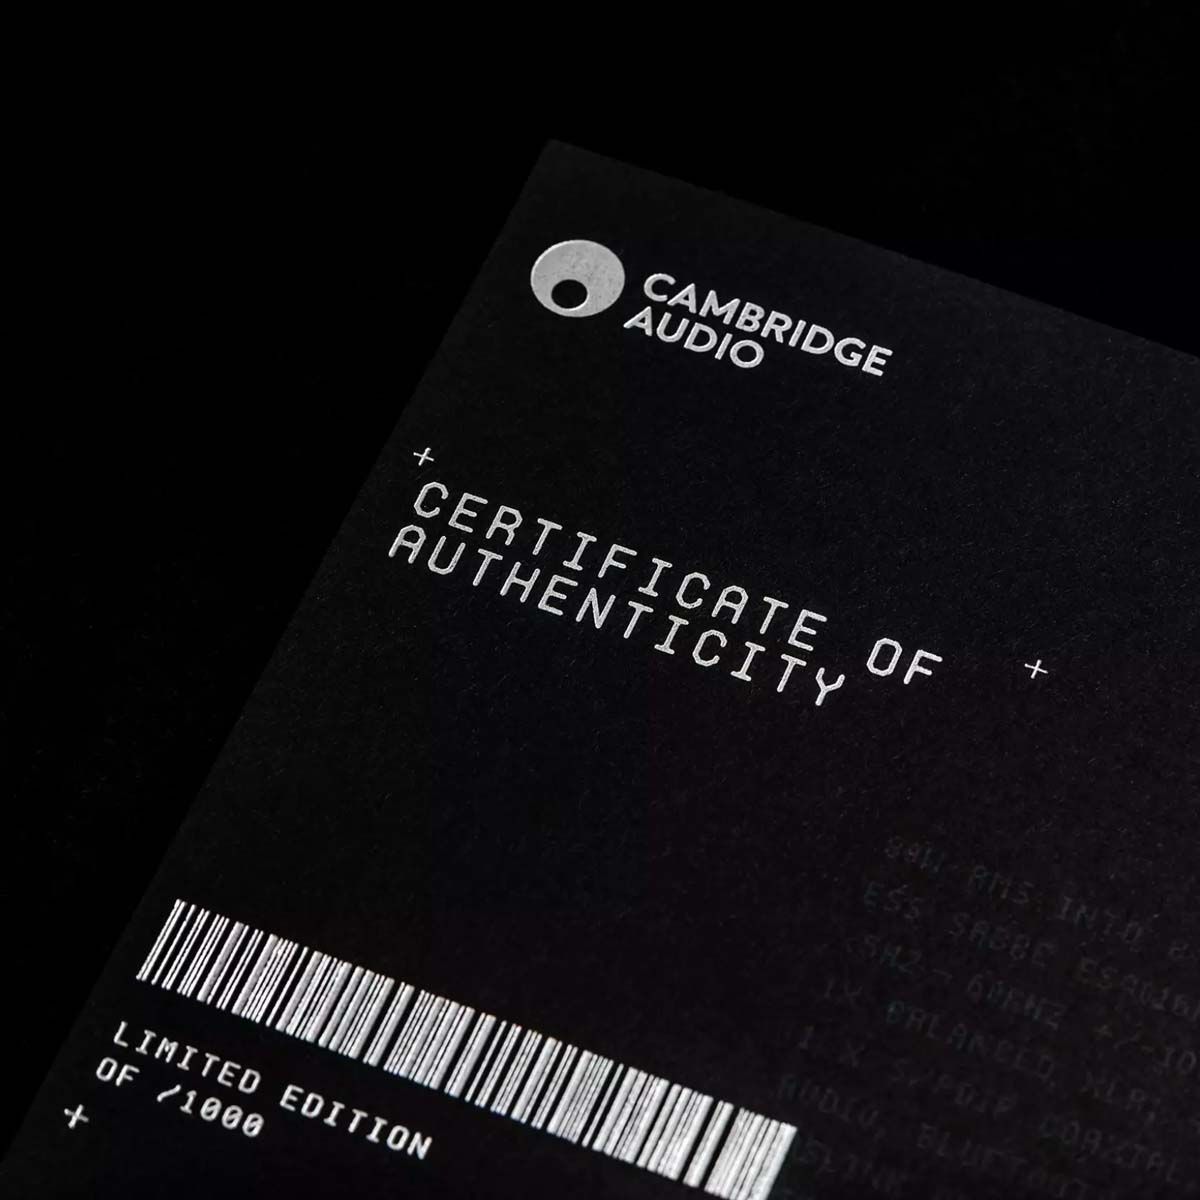 Cambridge Audio CXC v2 CD Transport - Black Edition close-up of certificate of authenticity